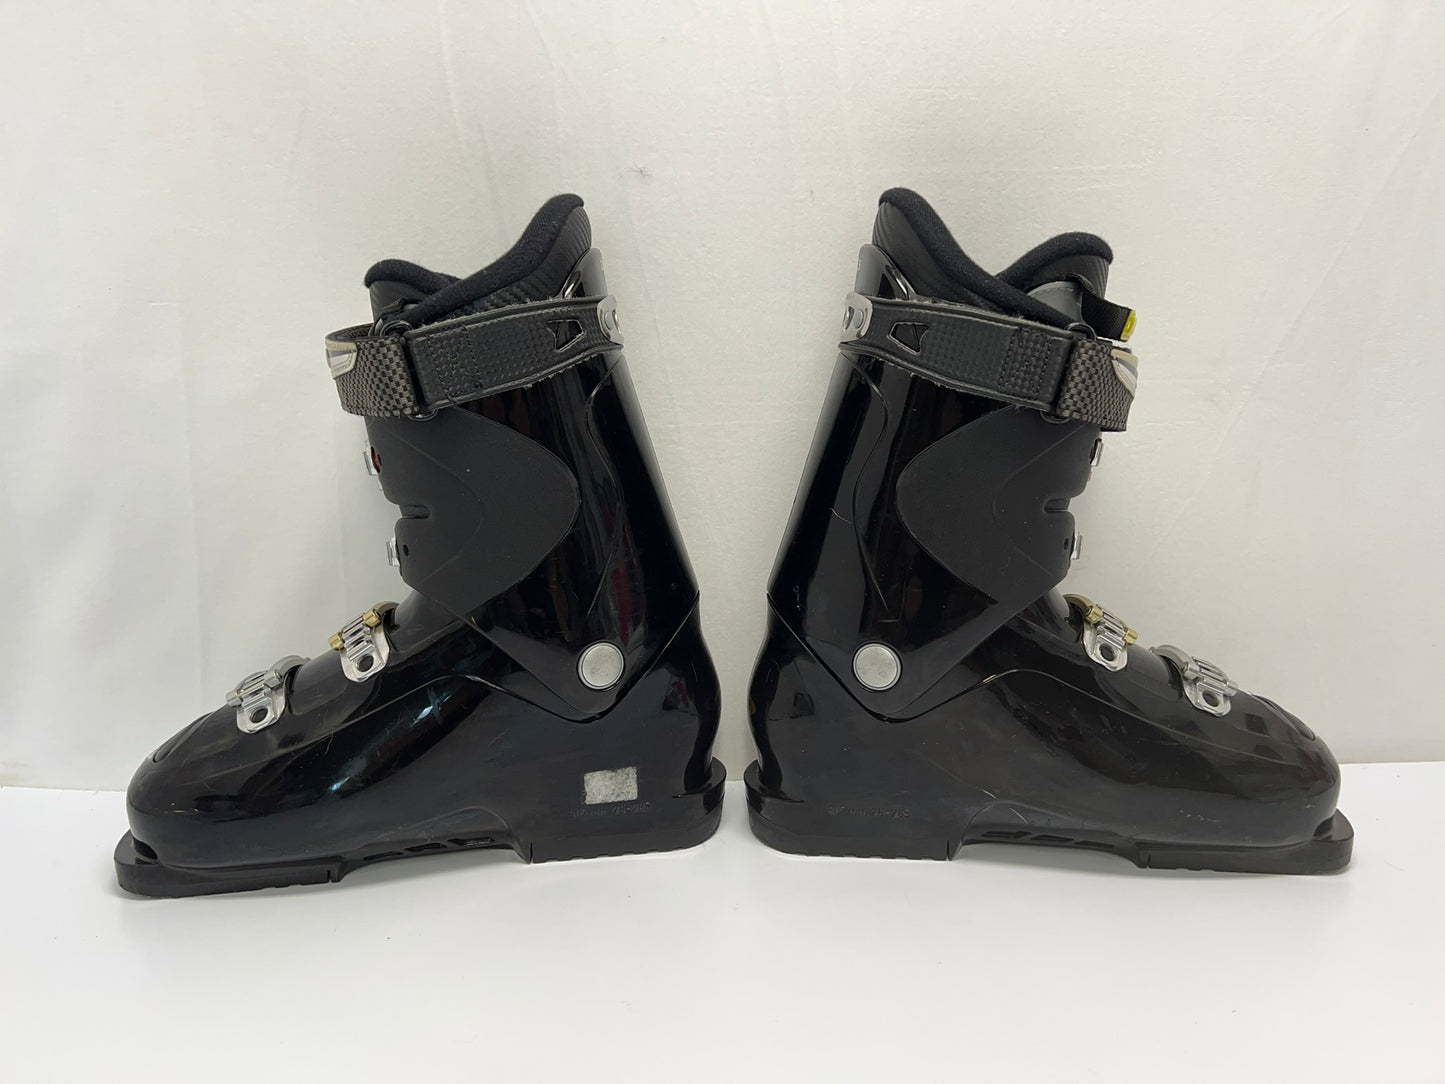 Ski Boots Mondo Size 26.5 Men's Size 8.5 Ladies Size 9.5 307 mm Salomon Foil Black And Gold New Demo Model